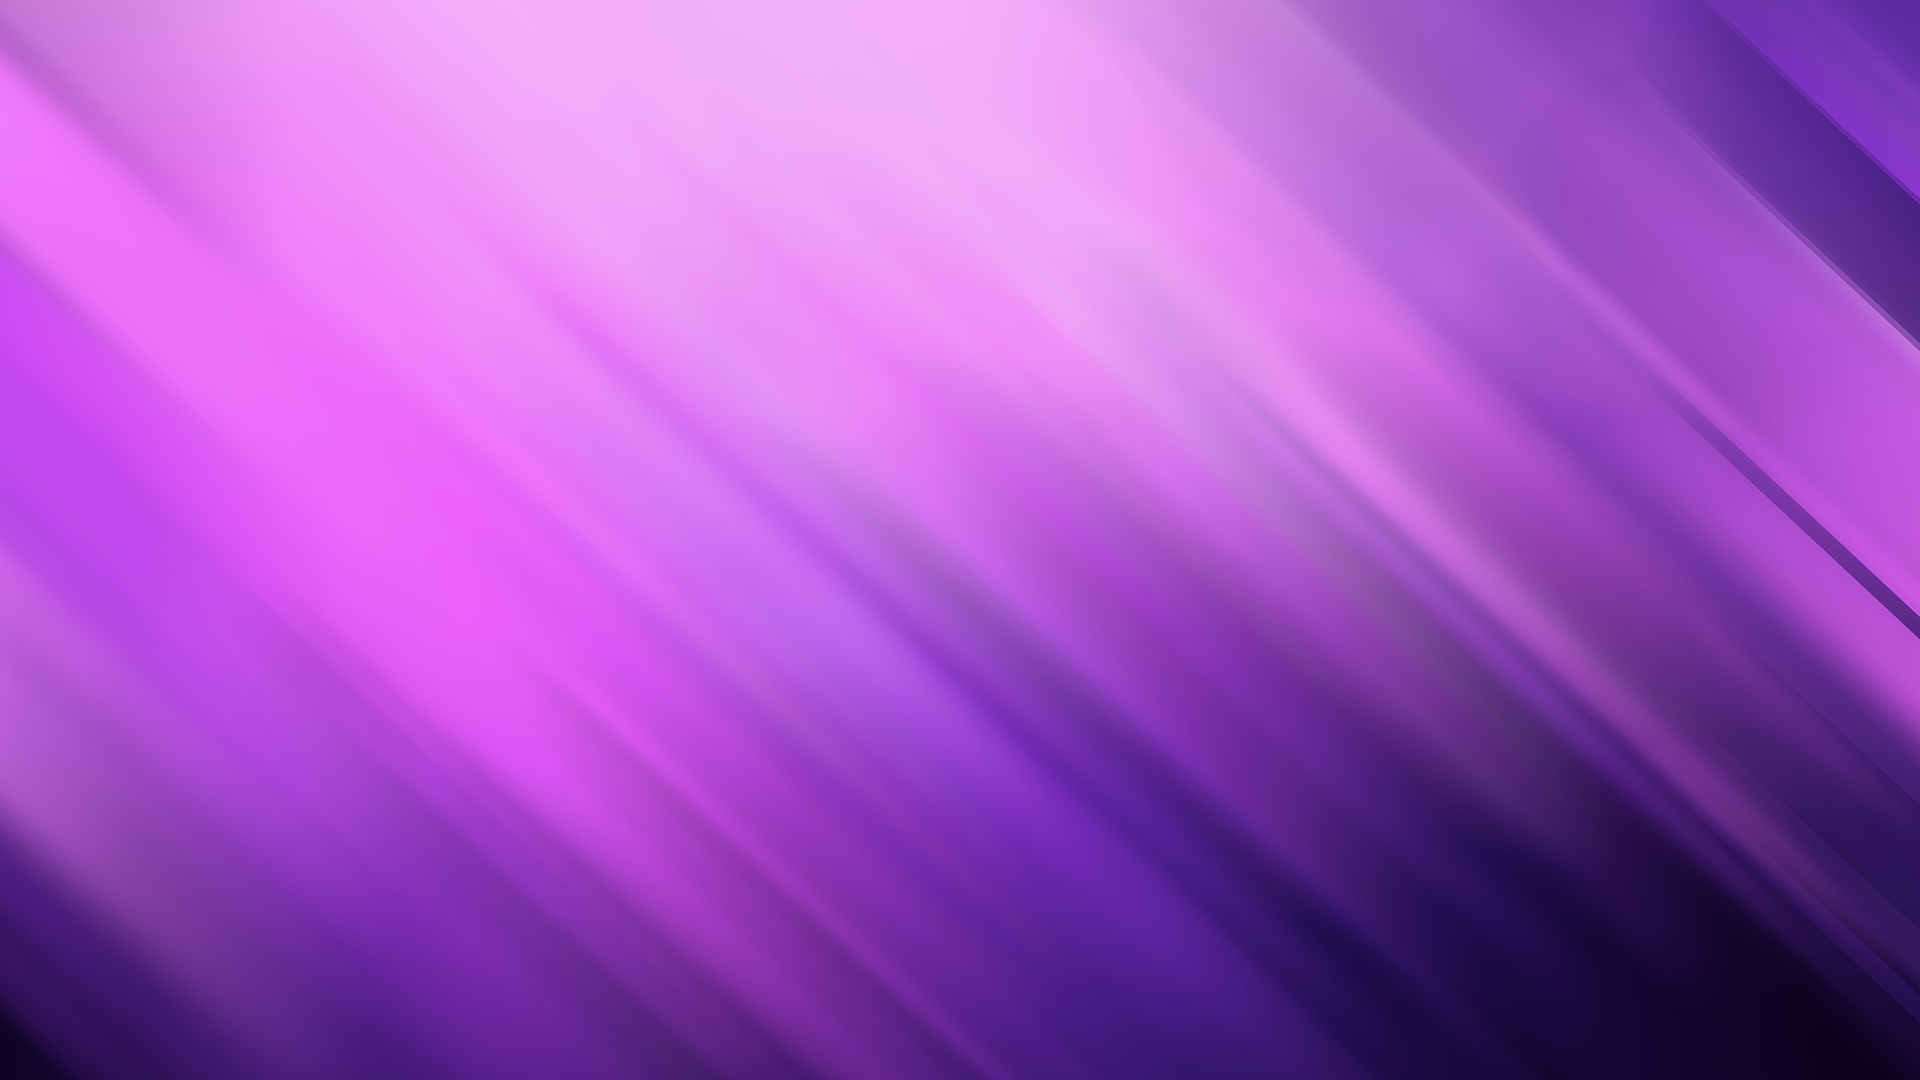 HD Minimalist Purple Wallpaper For Mac and Windows by thaomaoh on DeviantArt